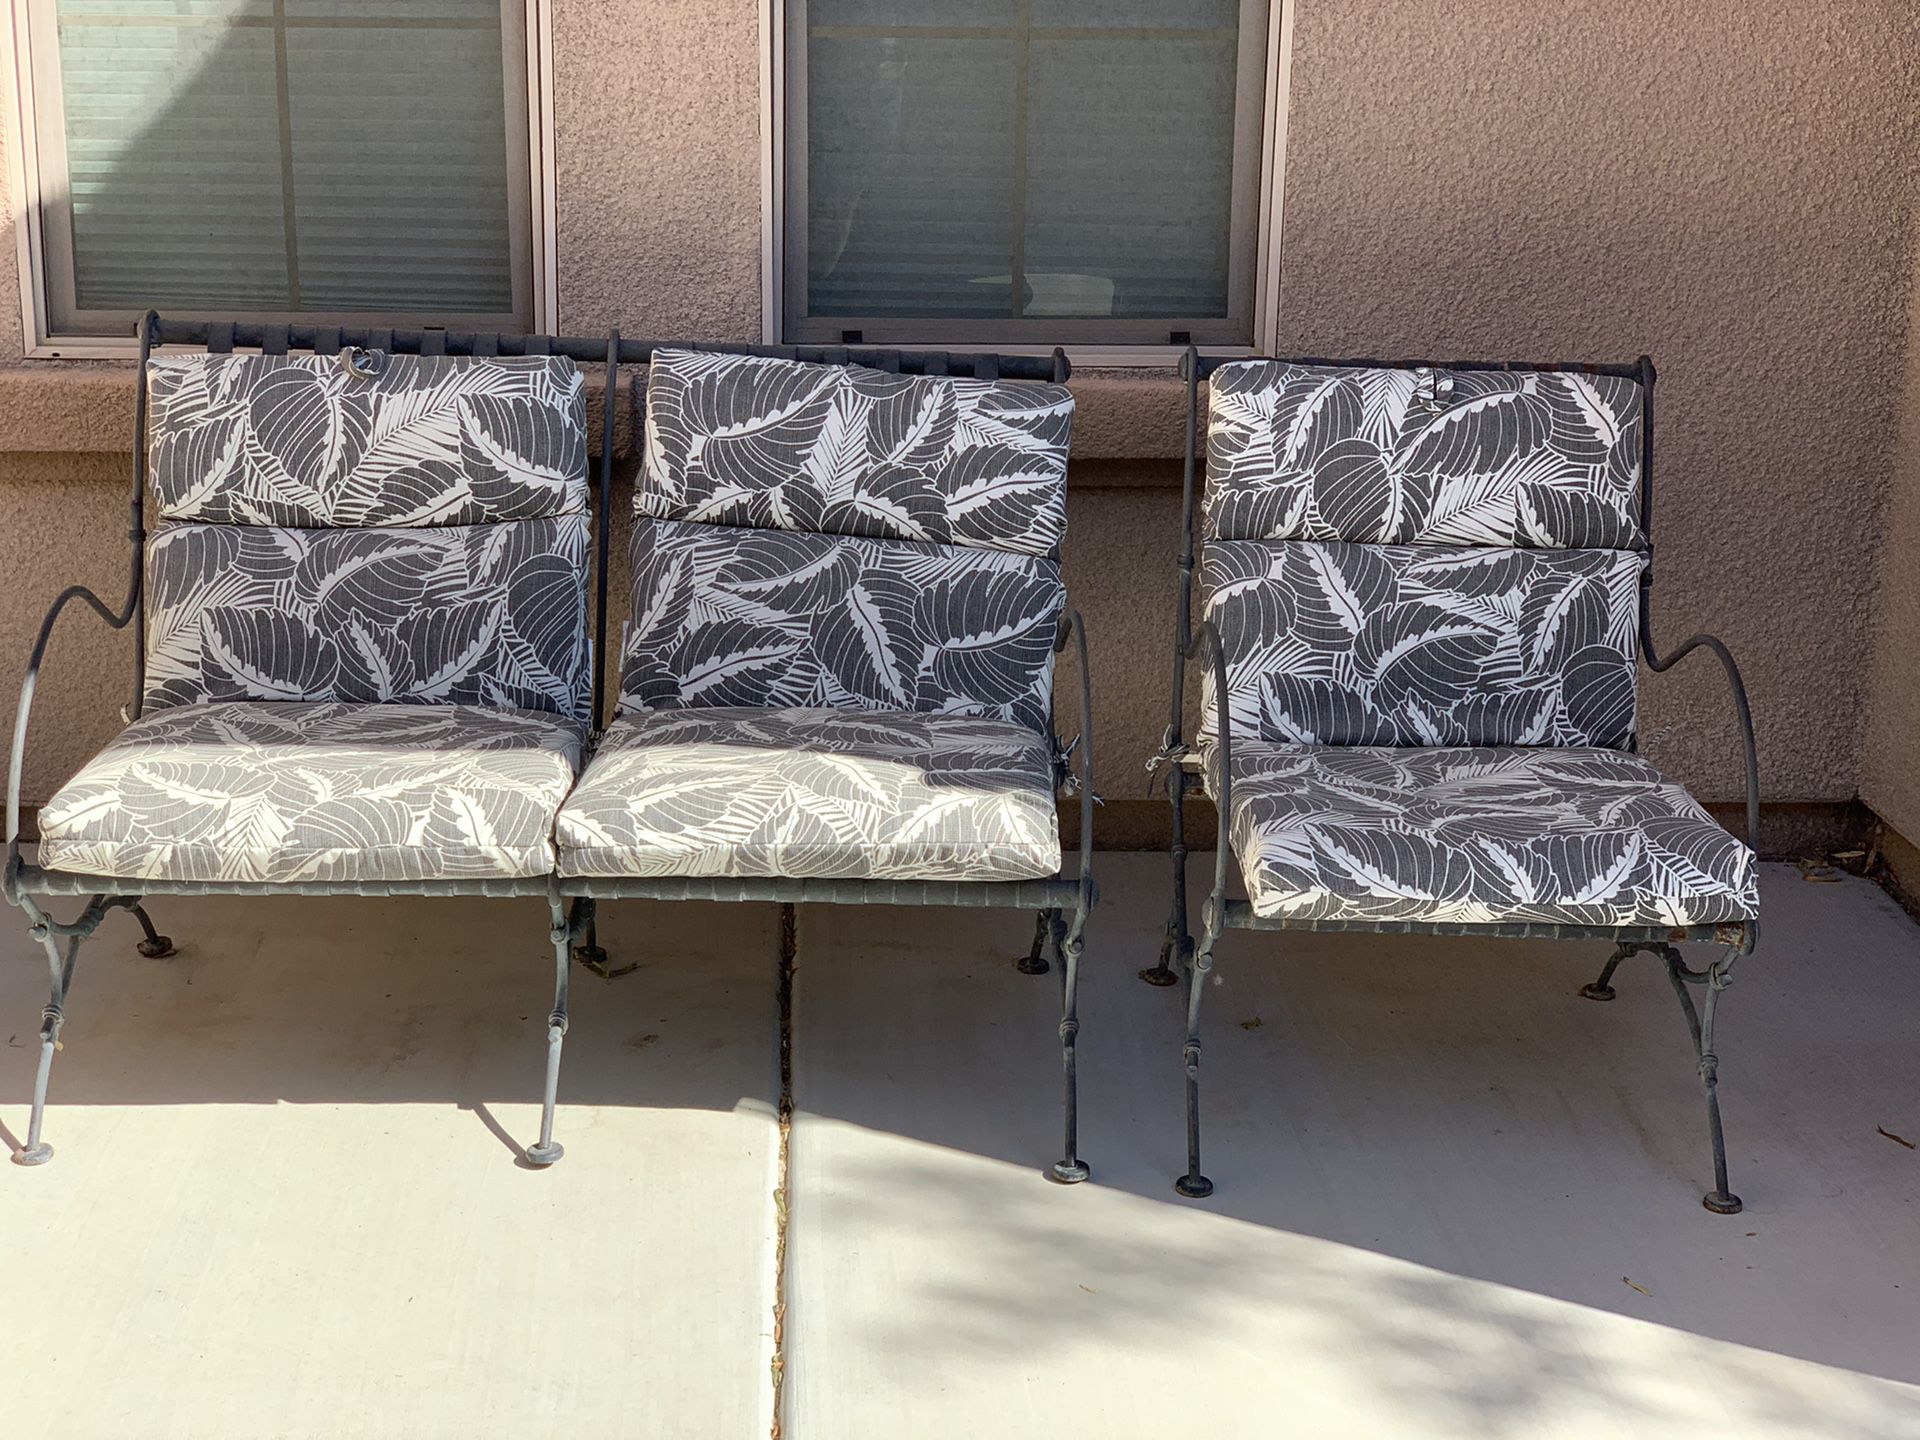 Outdoor iron furniture